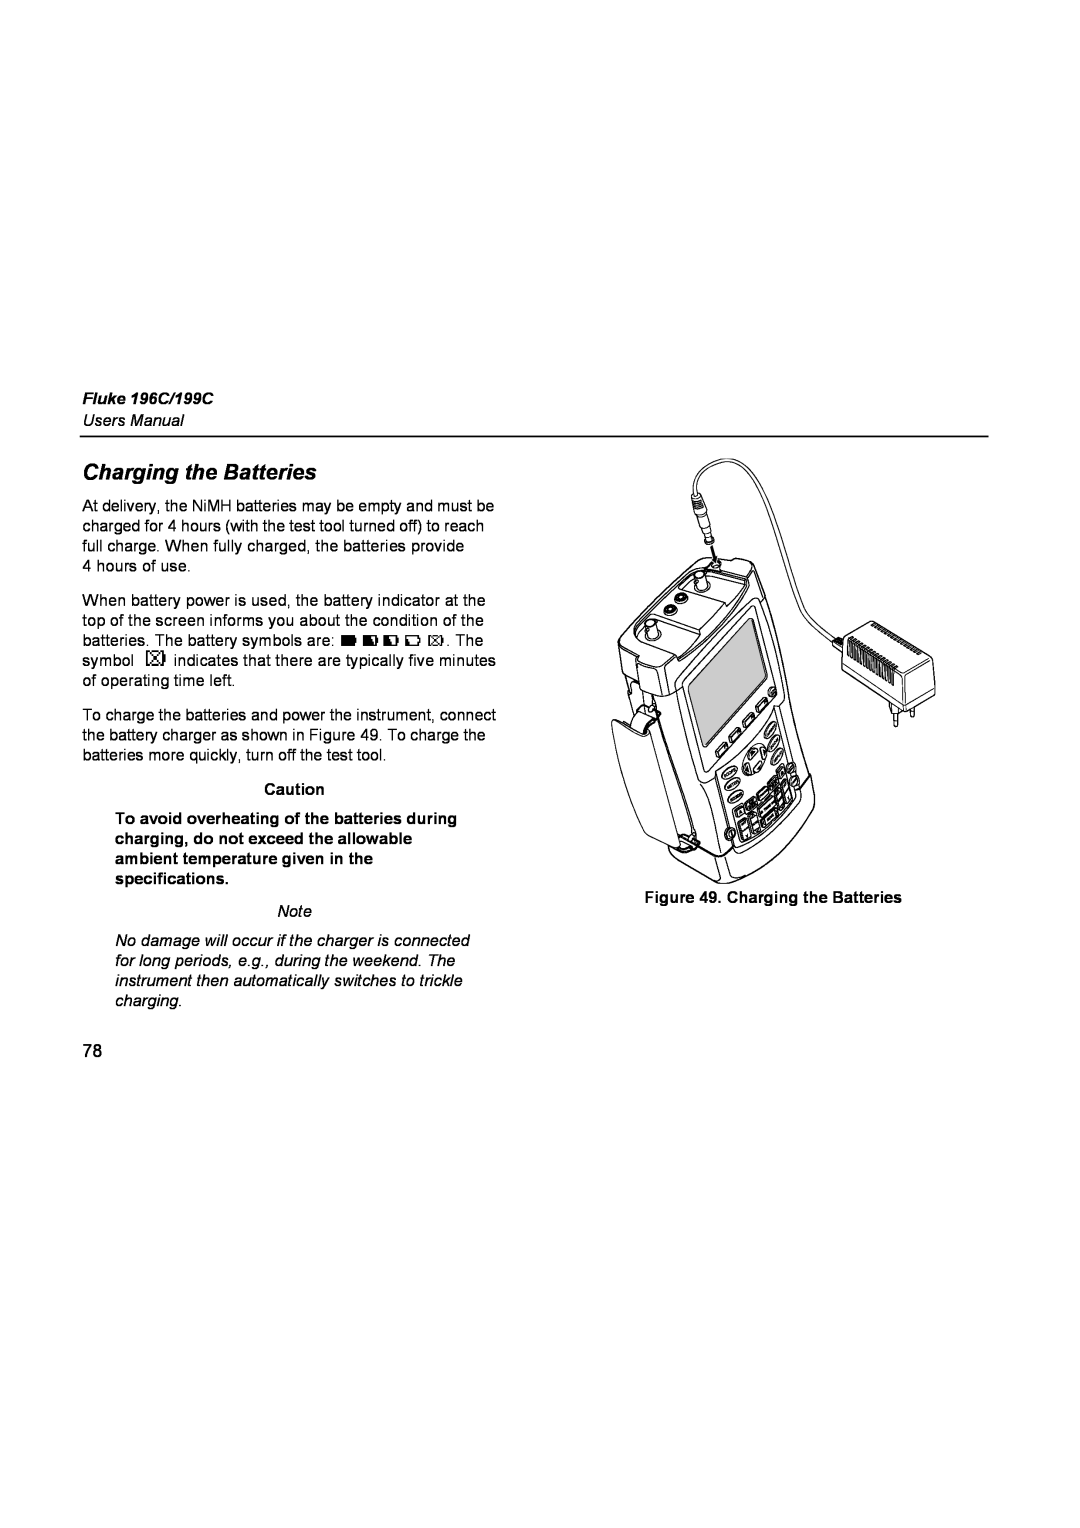 Fluke user manual Charging the Batteries, Fluke 196C/199C, Users Manual 